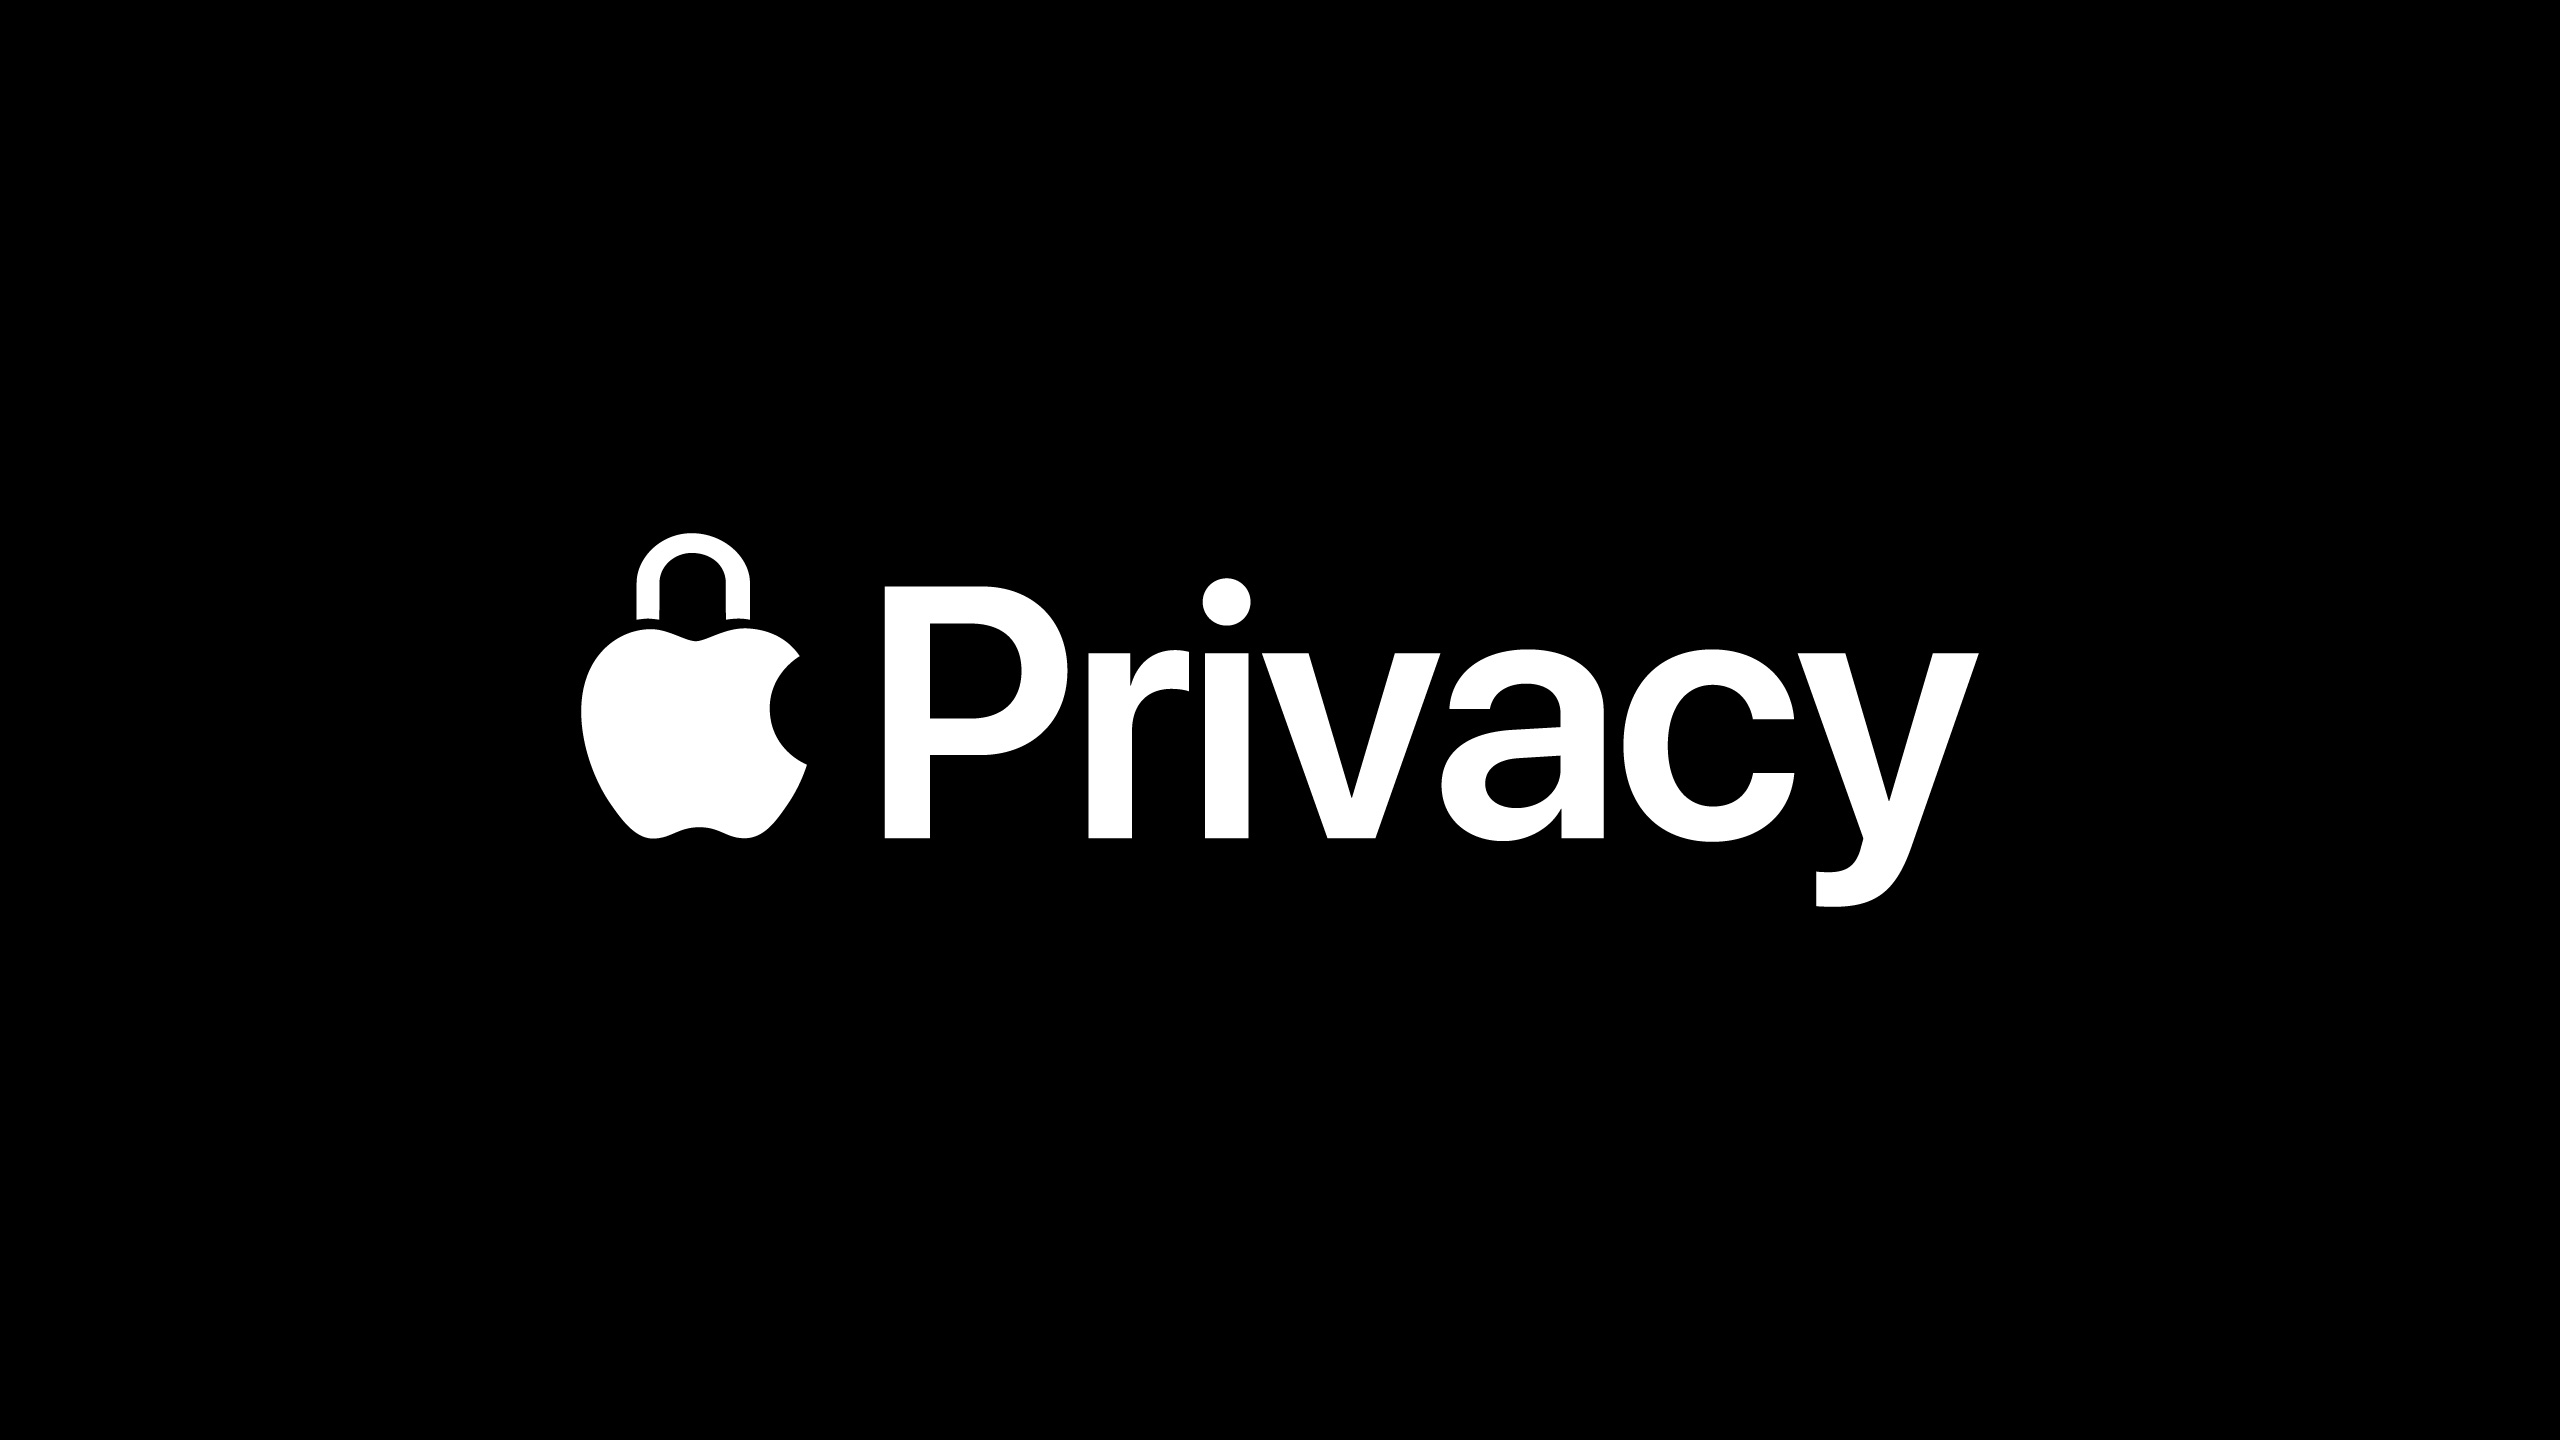 Apple e privacidade